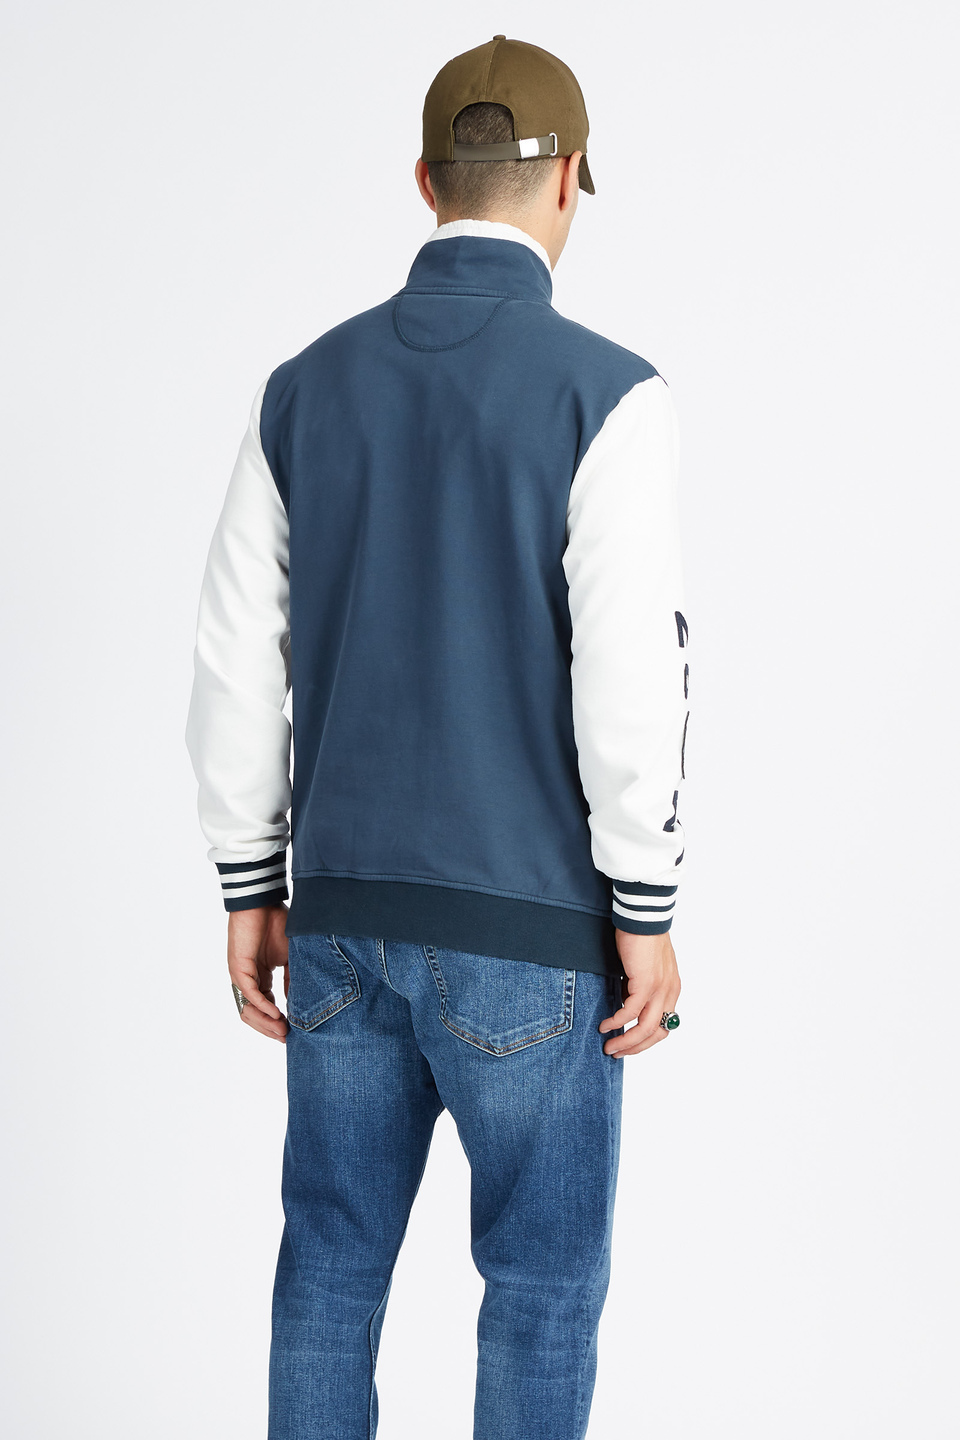 Polo Academy men's full-zip crewneck sweatshirt in color block with large logo - Vandan | La Martina - Official Online Shop